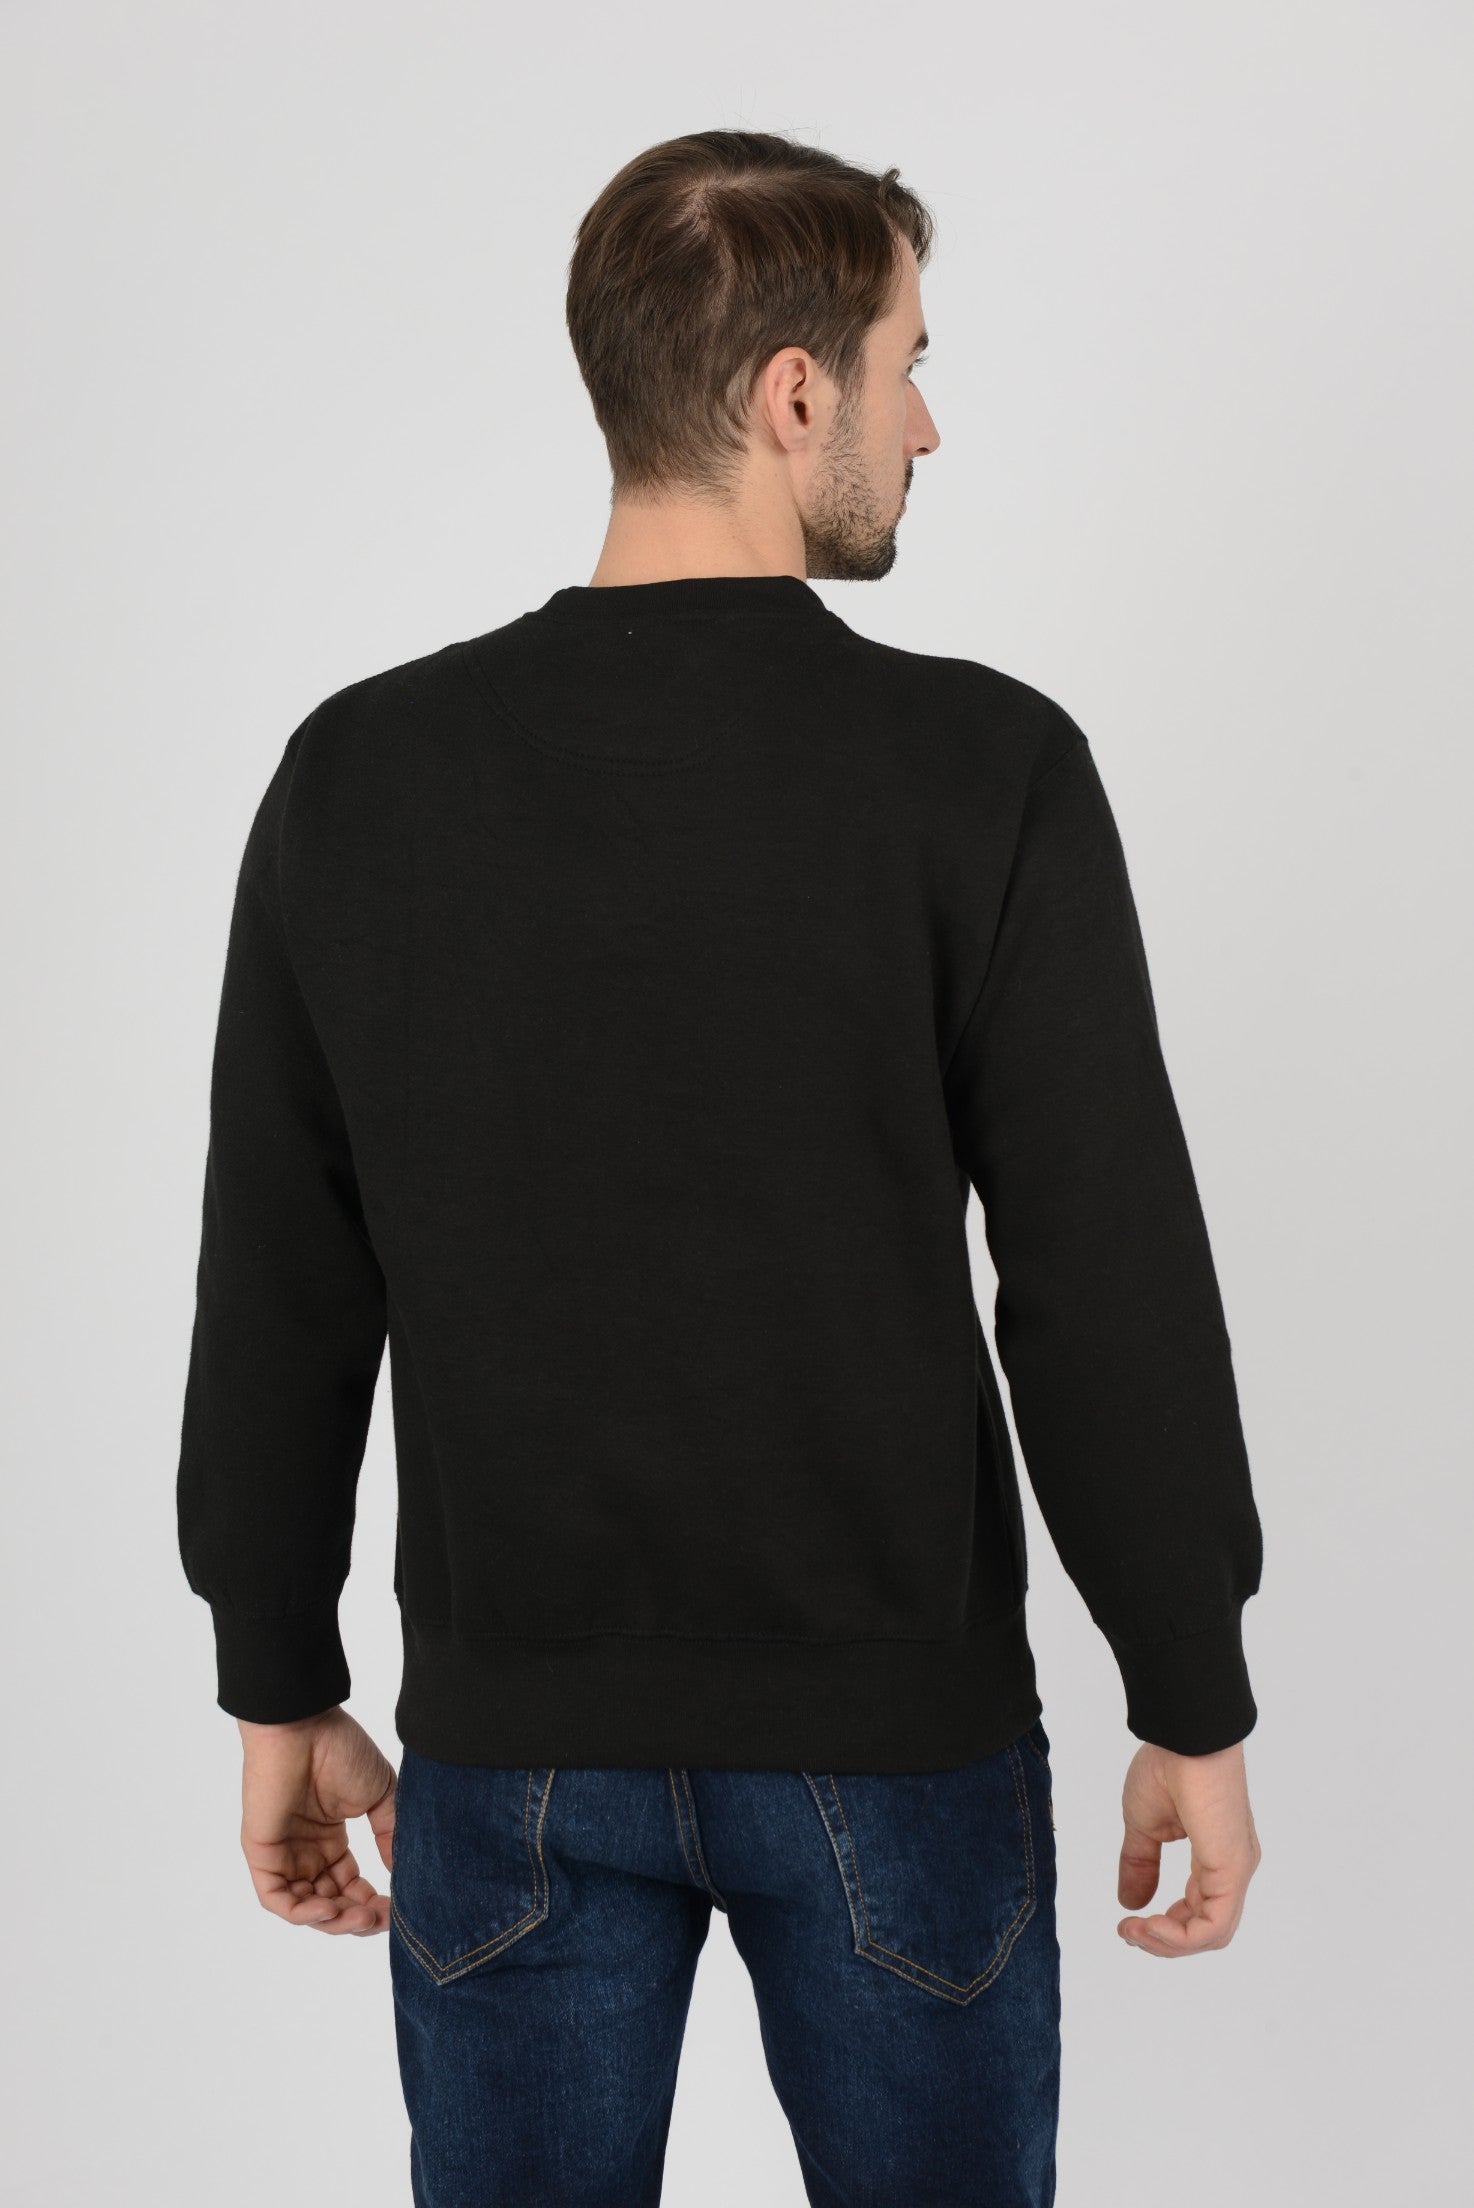 Mens-Plain-Fleece-Sweatshirt-Casual-Black